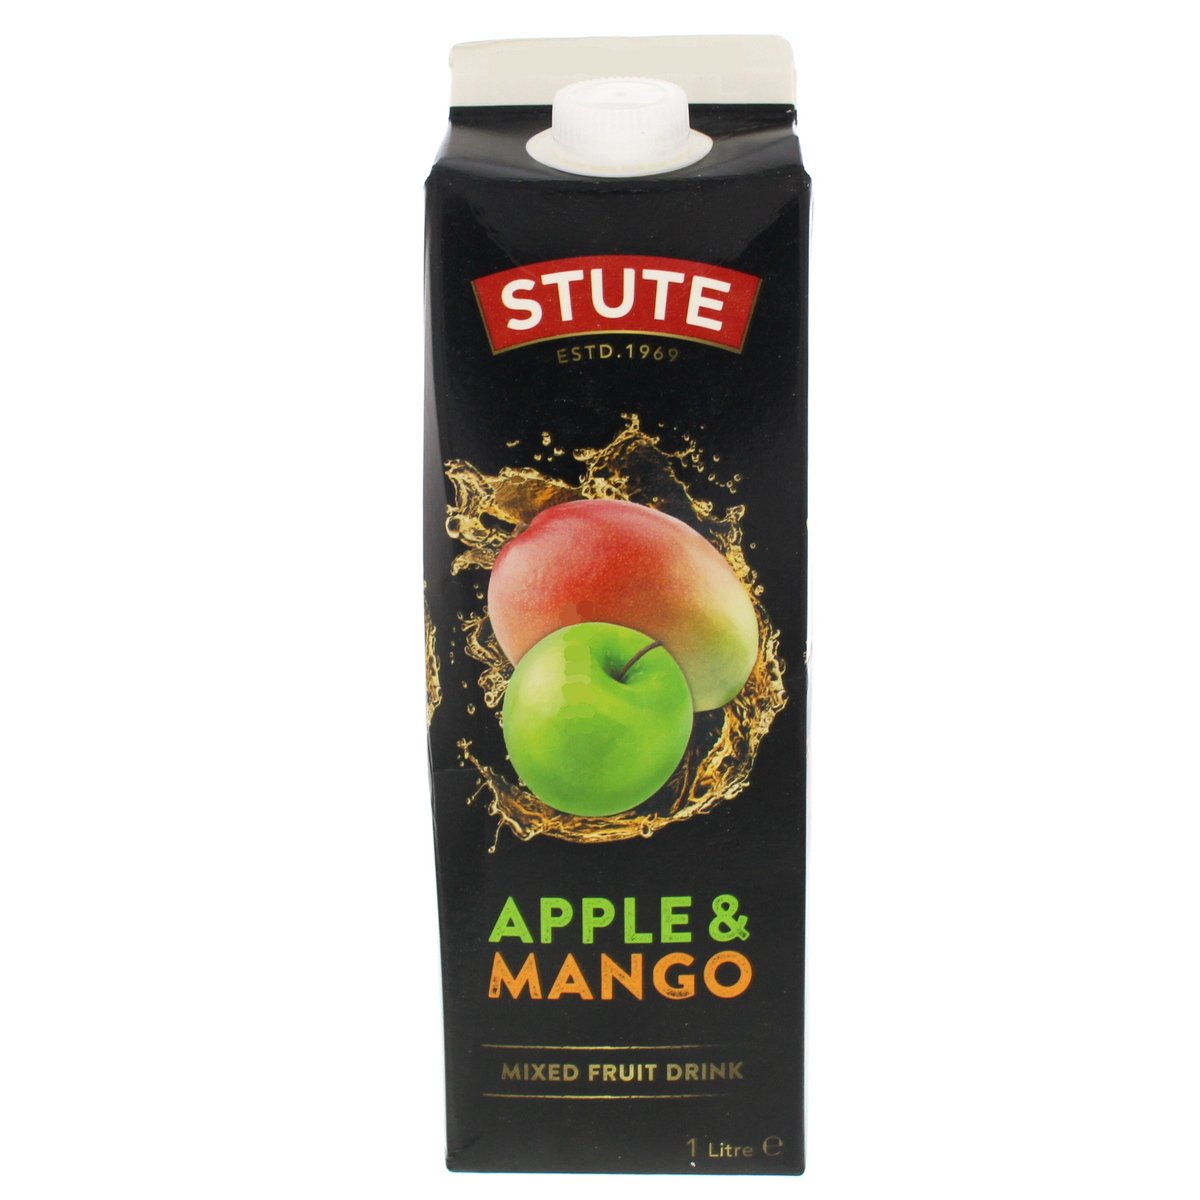 Stute Apple & Mango Mixed Fruit Drink 1 Litre